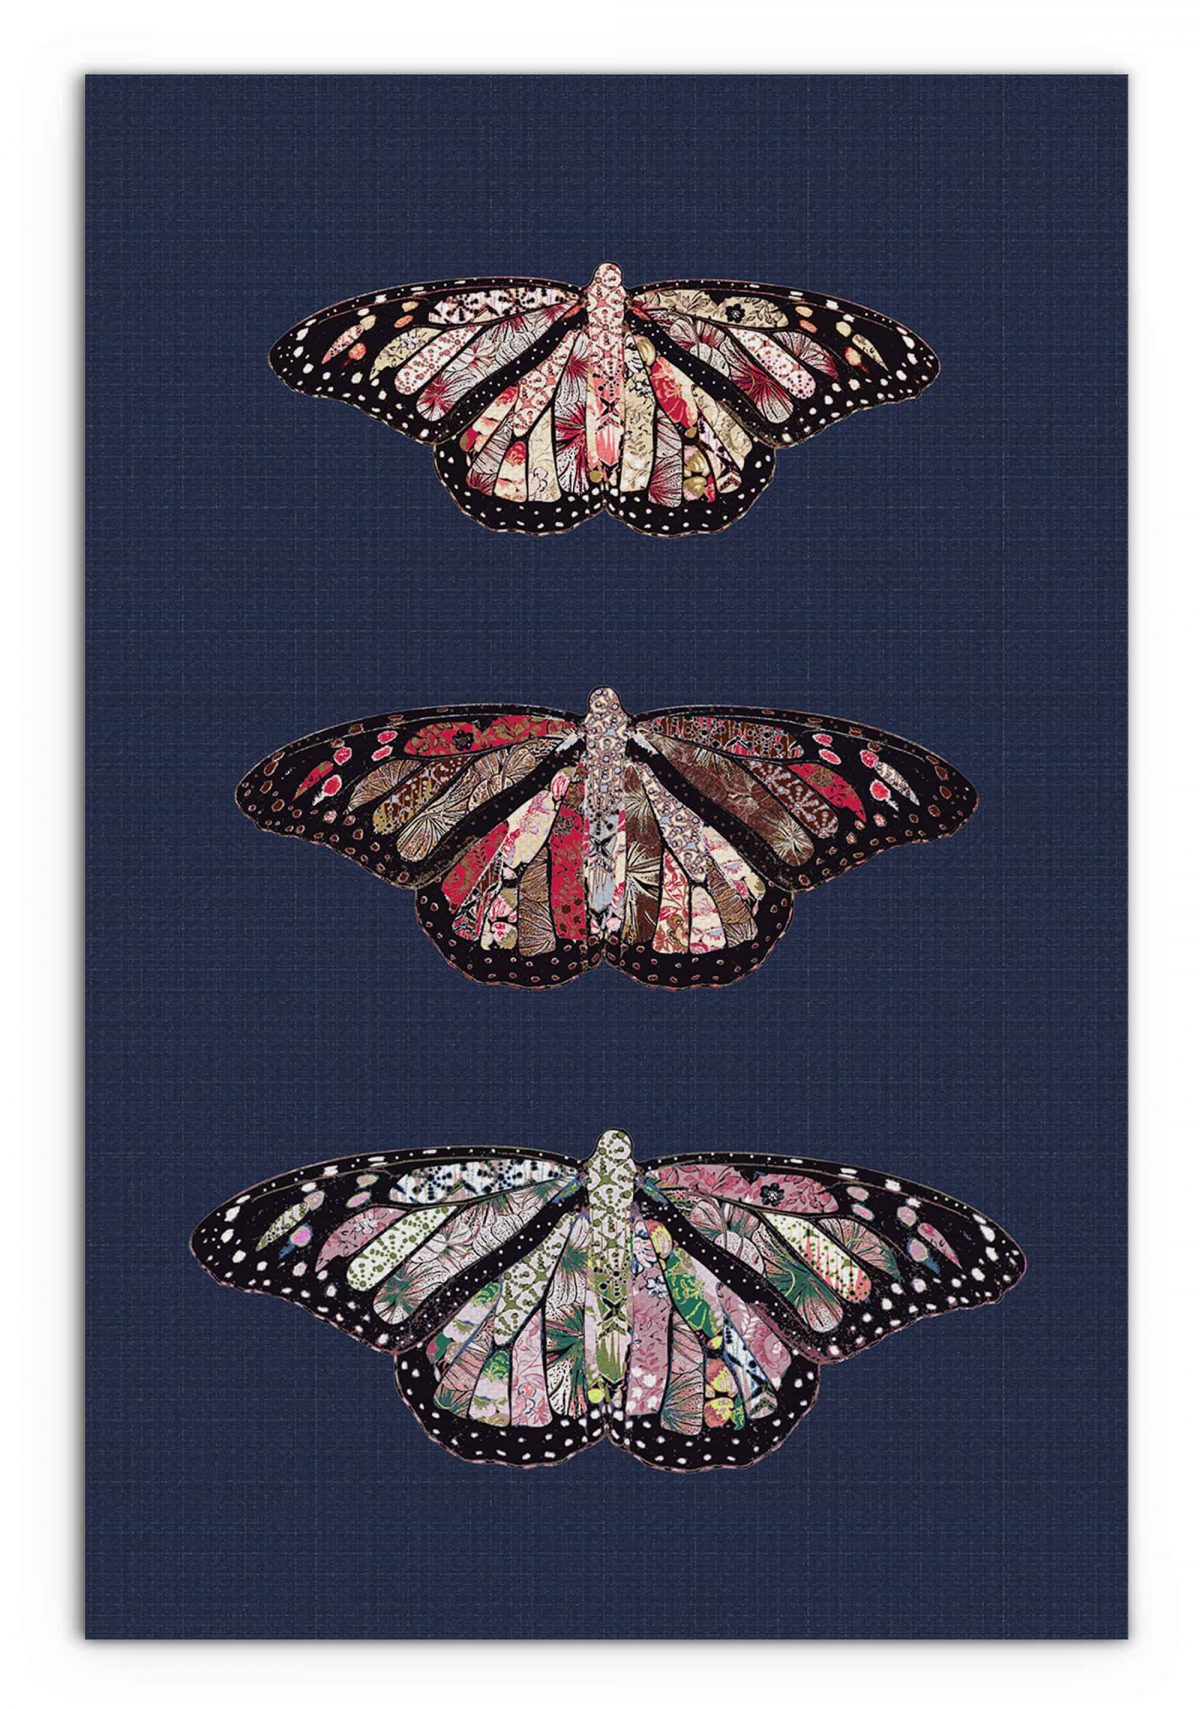 Butterflies Rustic on Denim Vertical 24x36 Regular Front View